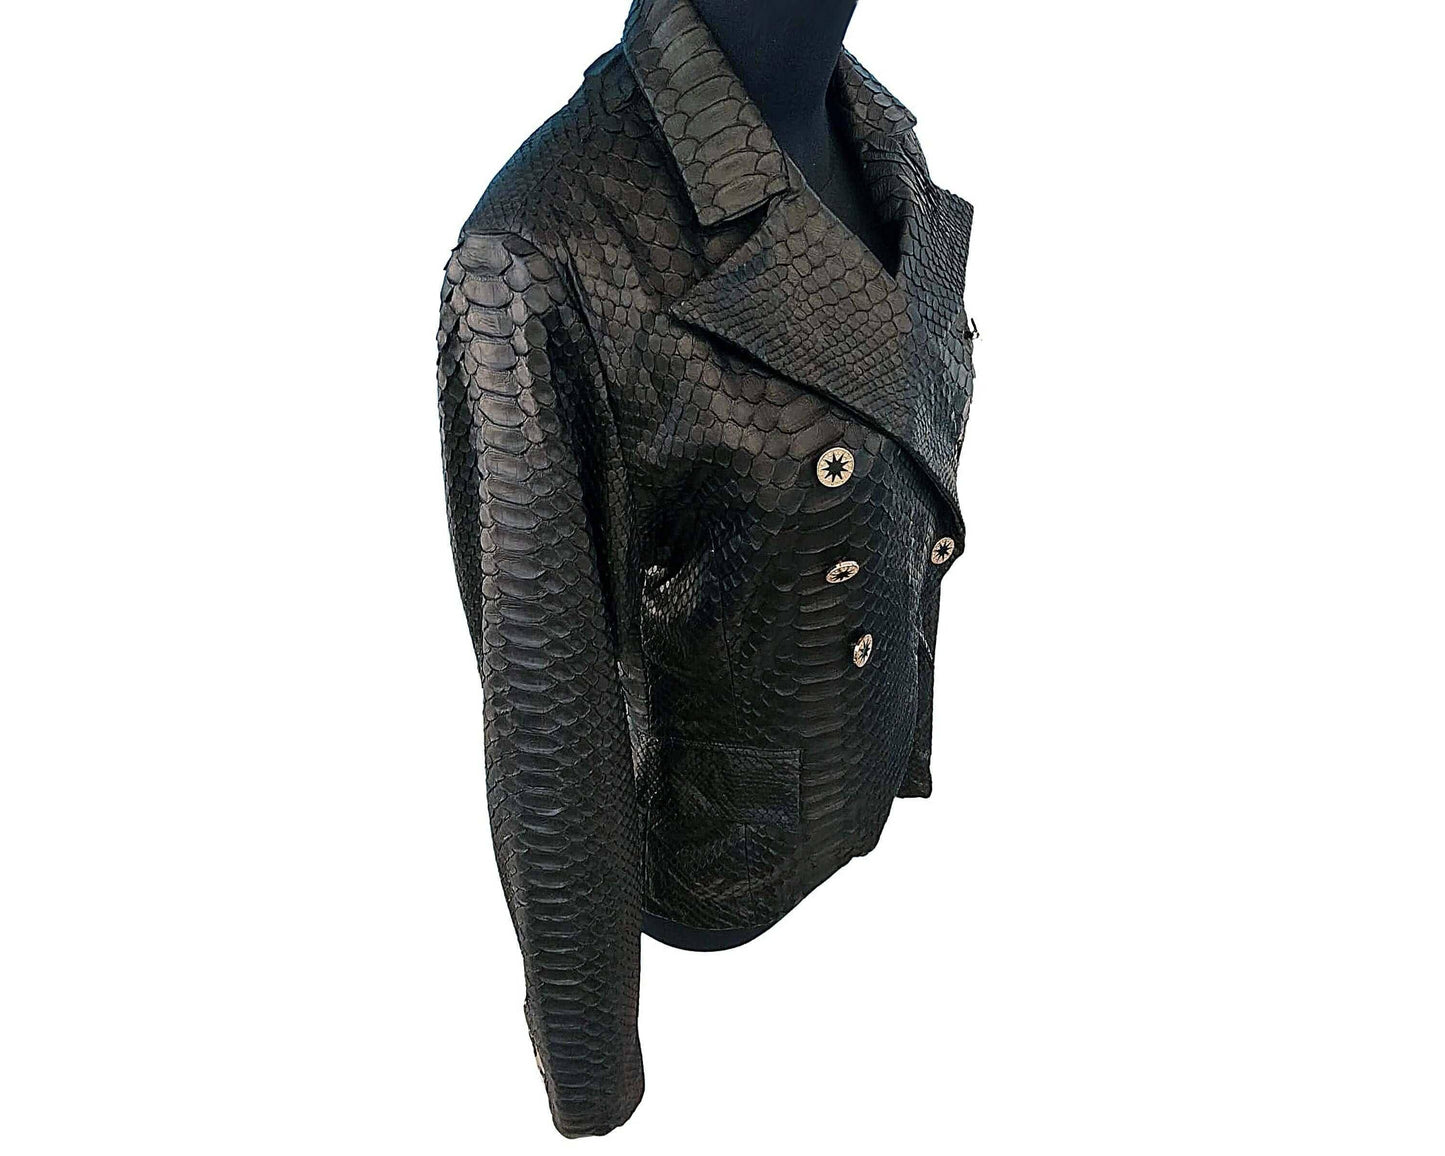 Women Jacket Snakeskin Blazer for Women Python Jacket by LFM Fashion